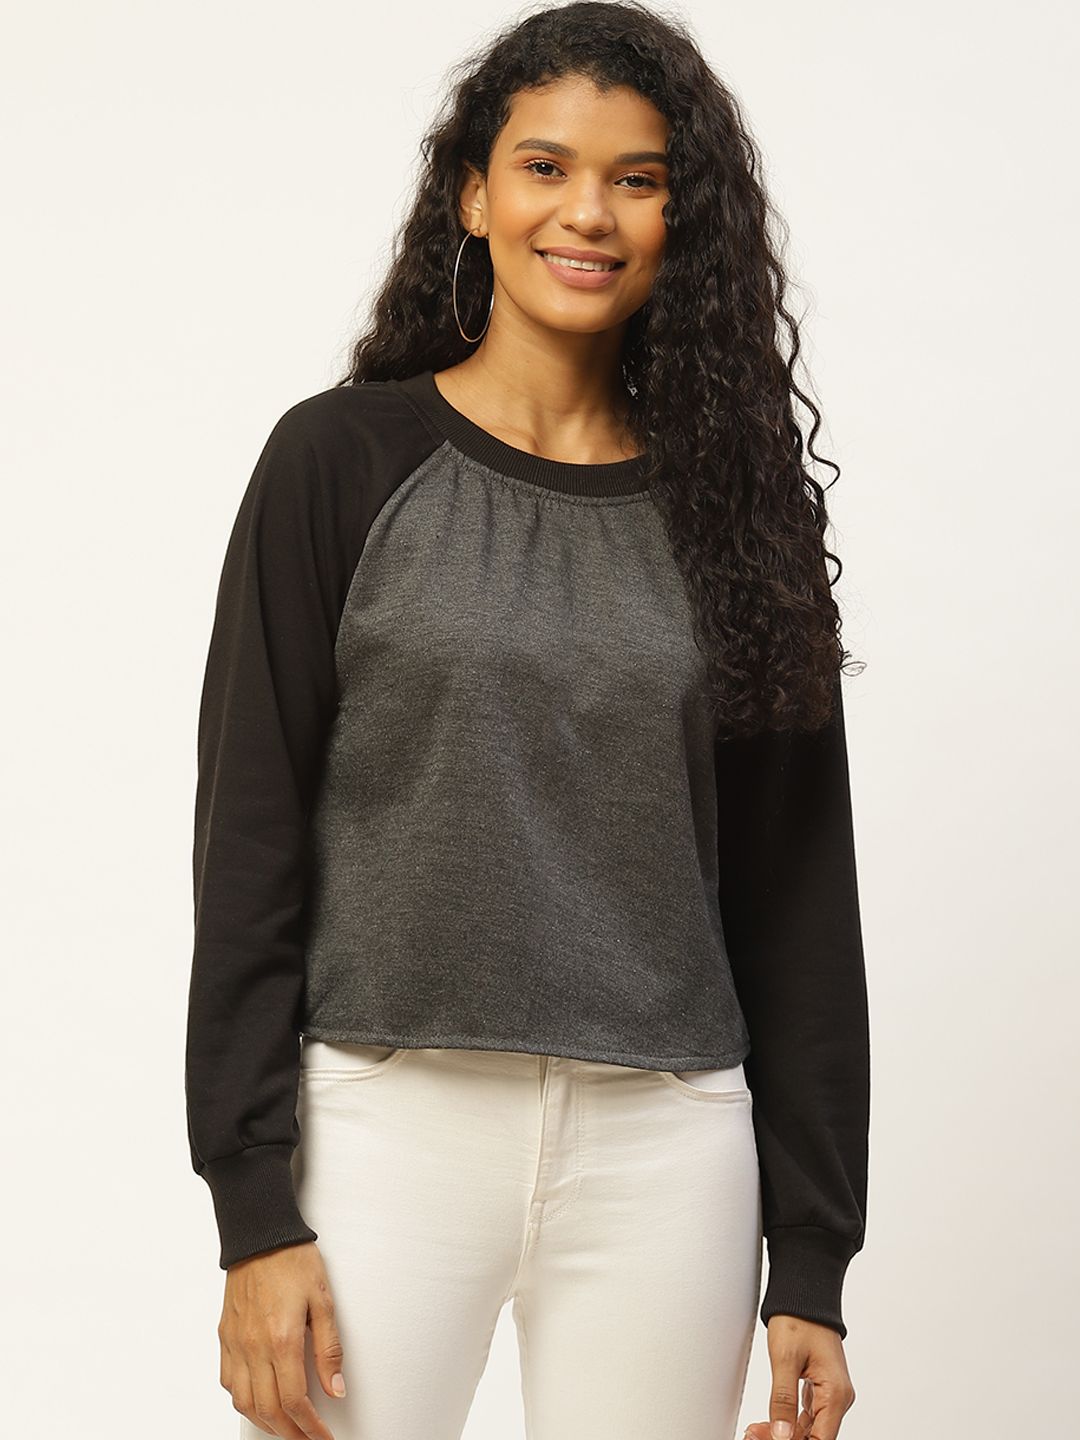 Belle Fille Women Charcoal Grey & Black Solid Sweatshirt Price in India